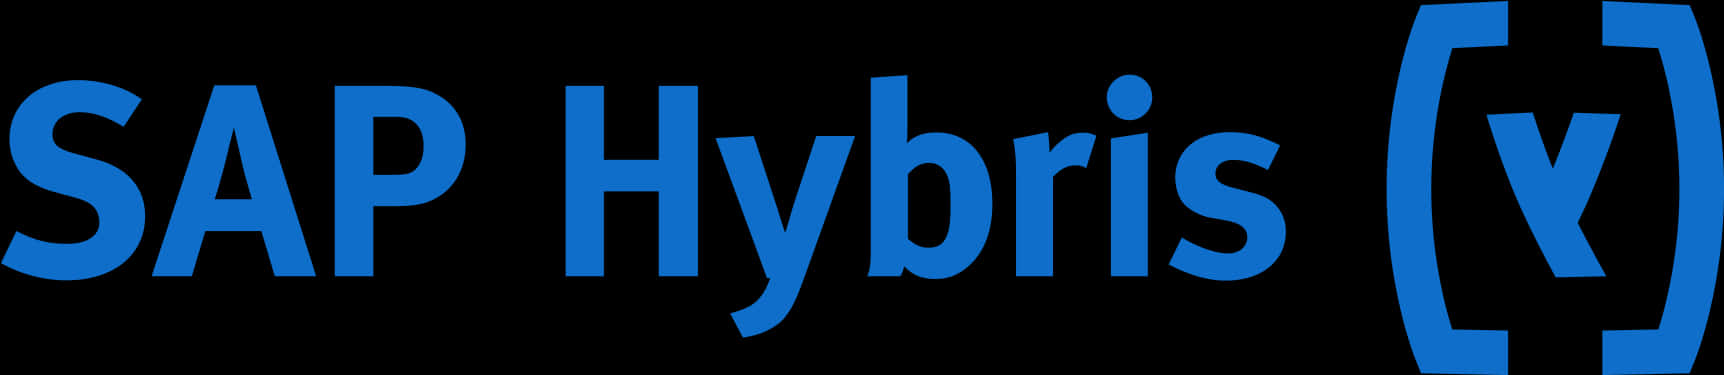 S A P Hybris Logo Blue Background PNG